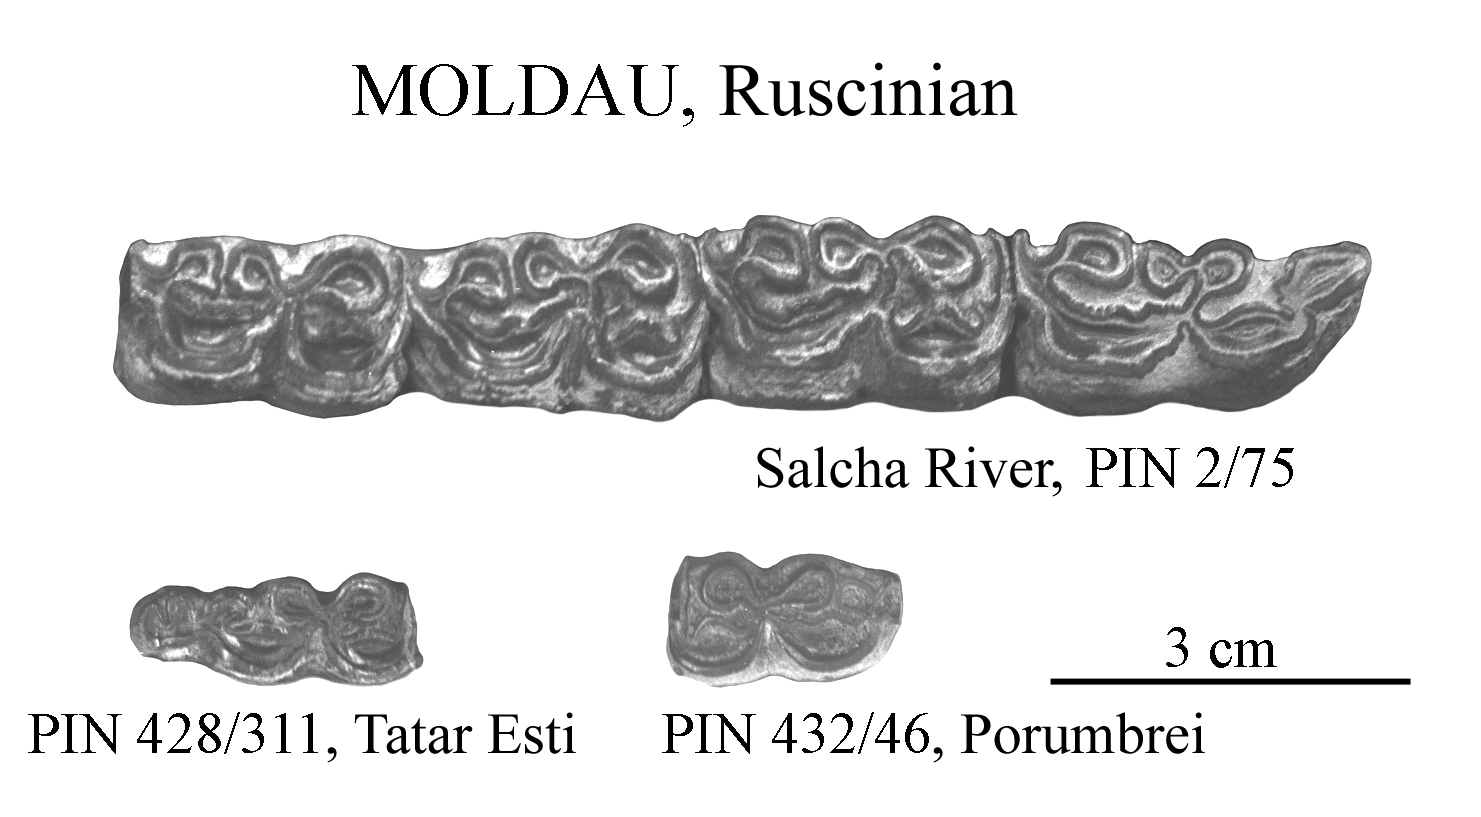 Moldau Lower cheek teeth photos